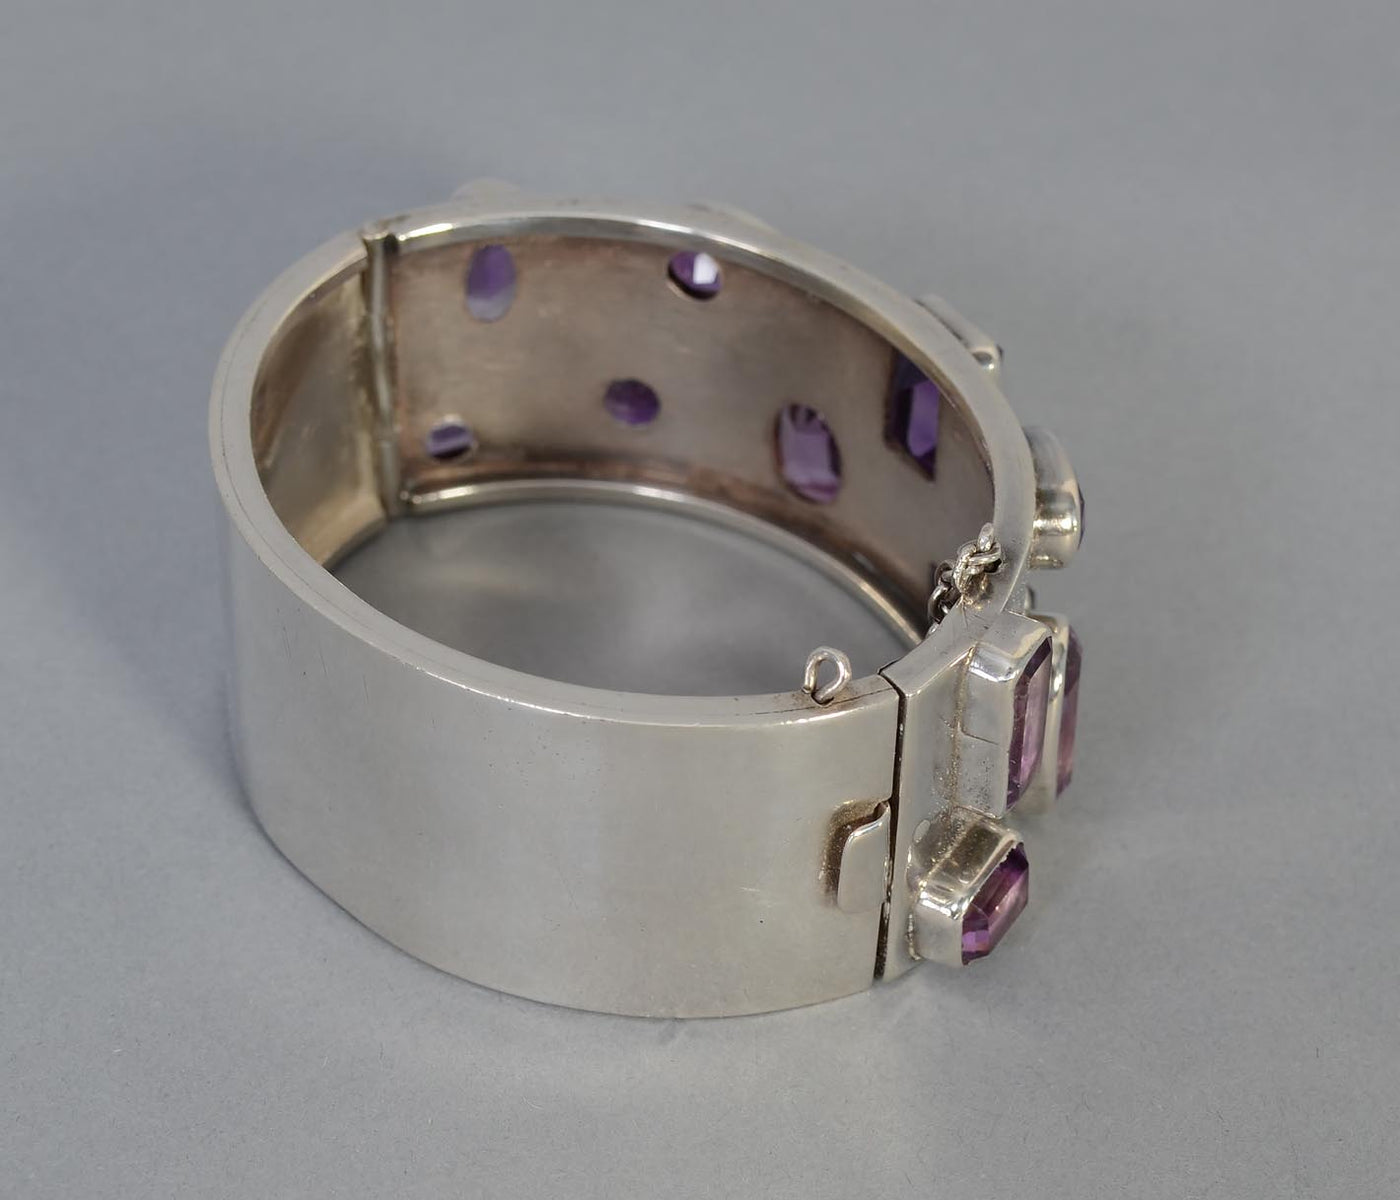 carmen-beckmann-silver-and-amethyst-bracelet-1428855-4